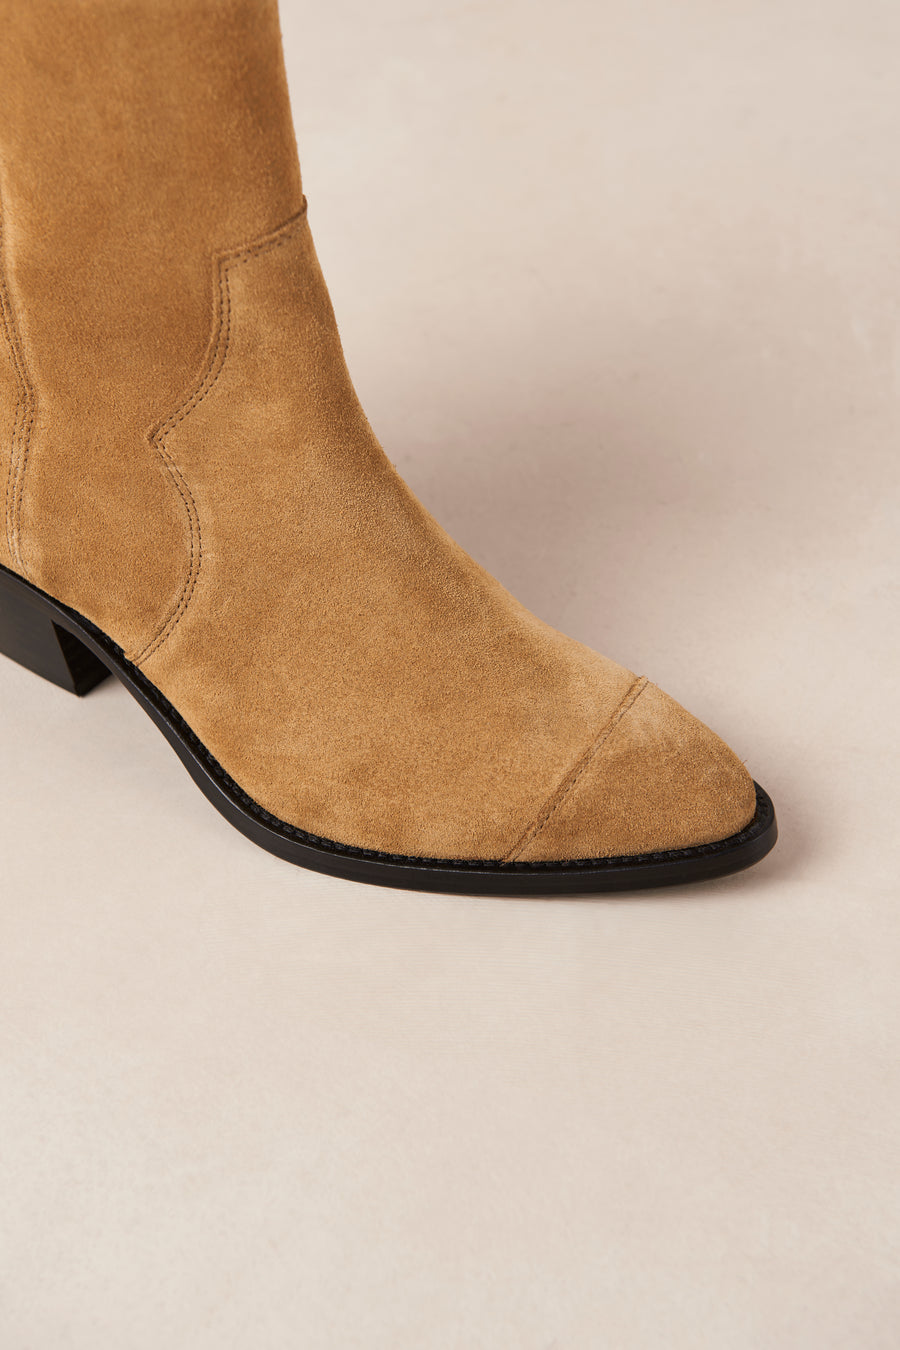 Dune Promising Block Heel Leather Chelsea Boots, Tan at John Lewis &  Partners